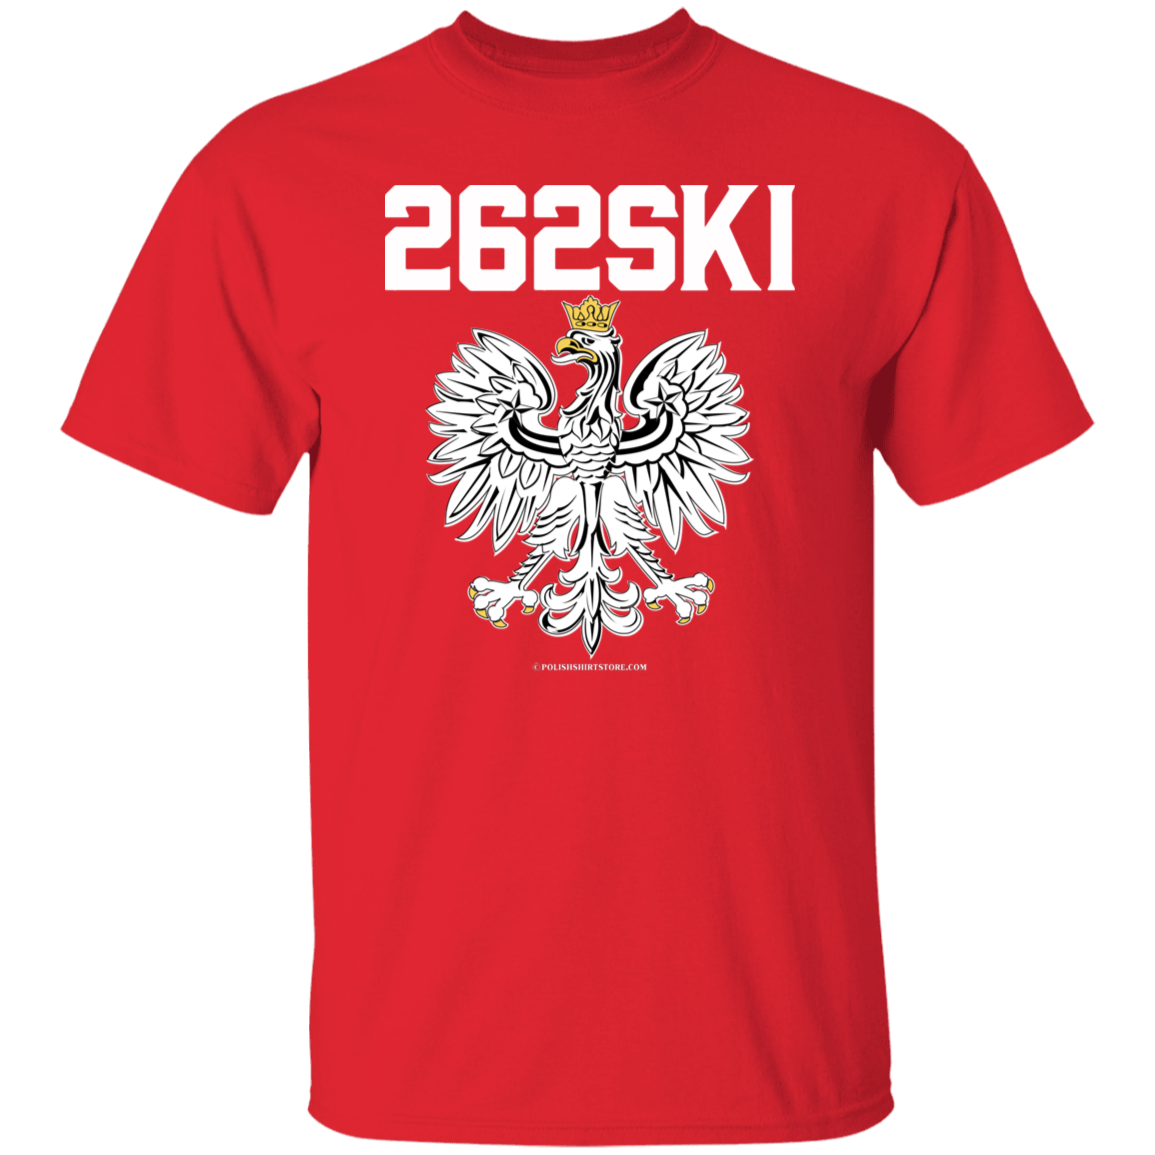 262SKI Apparel CustomCat G500 5.3 oz. T-Shirt Red S